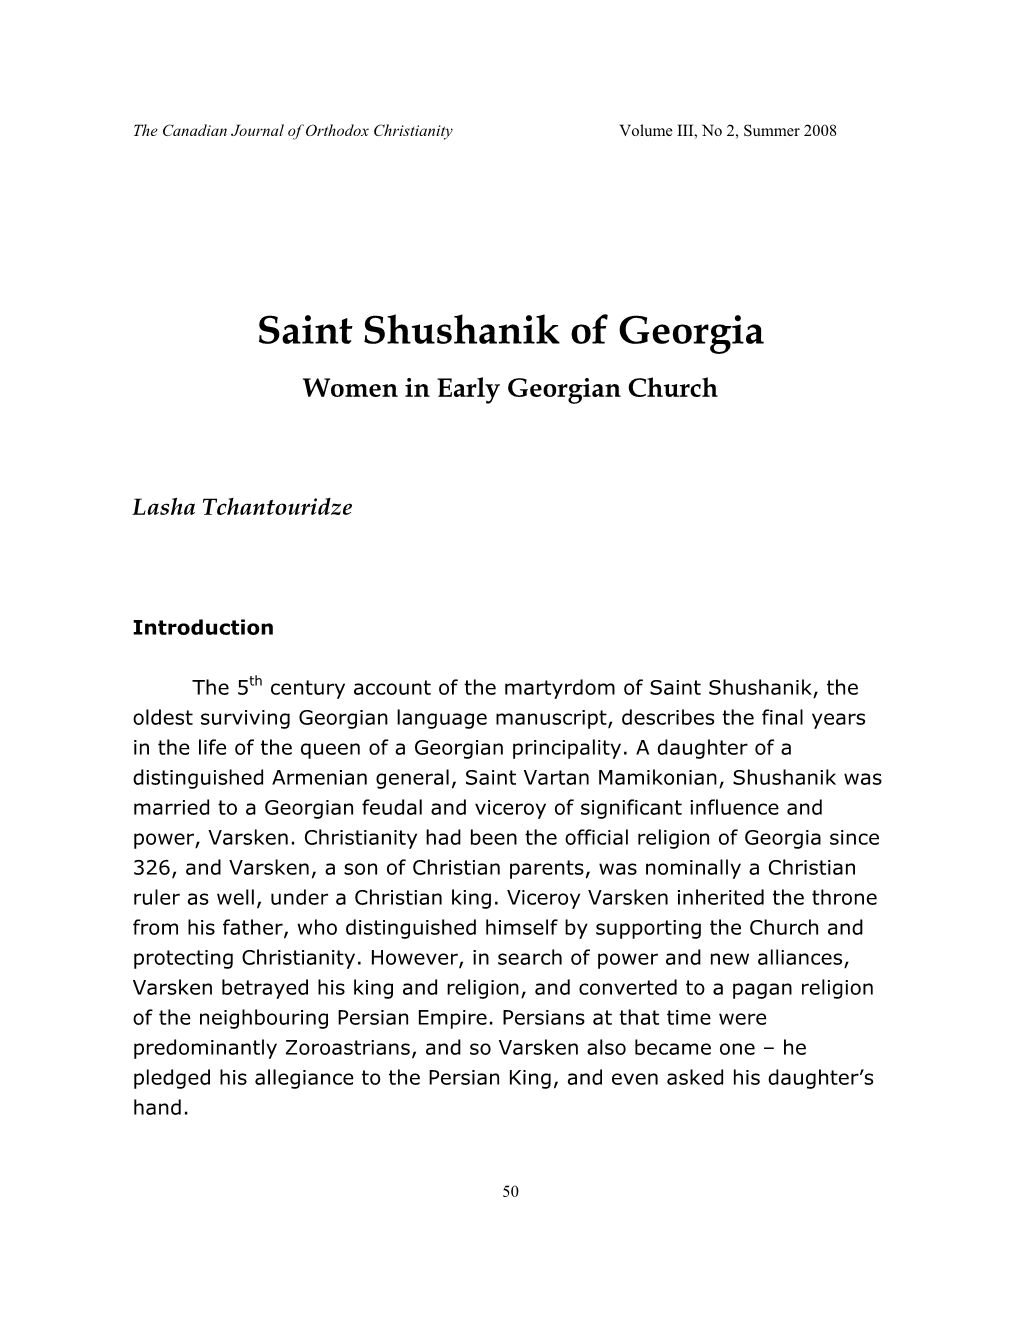 Lasha Tchantouridze, Saint Shushanik of Georgia